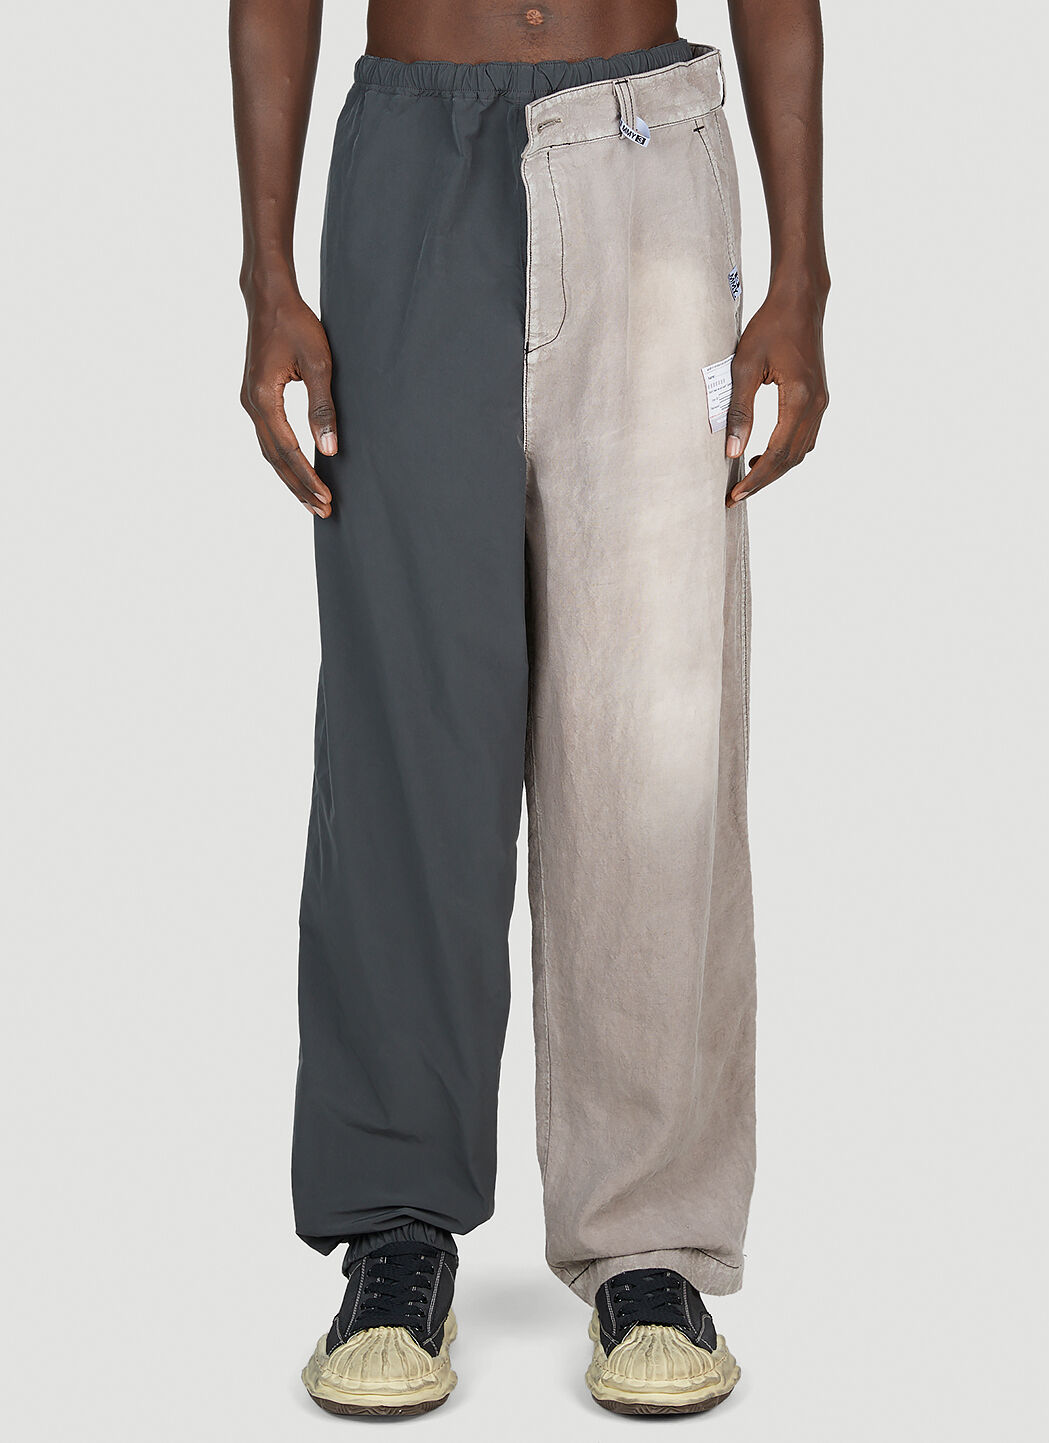 Maison Mihara Yasuhiro Combined Easy Pants in Grey | LN-CC®